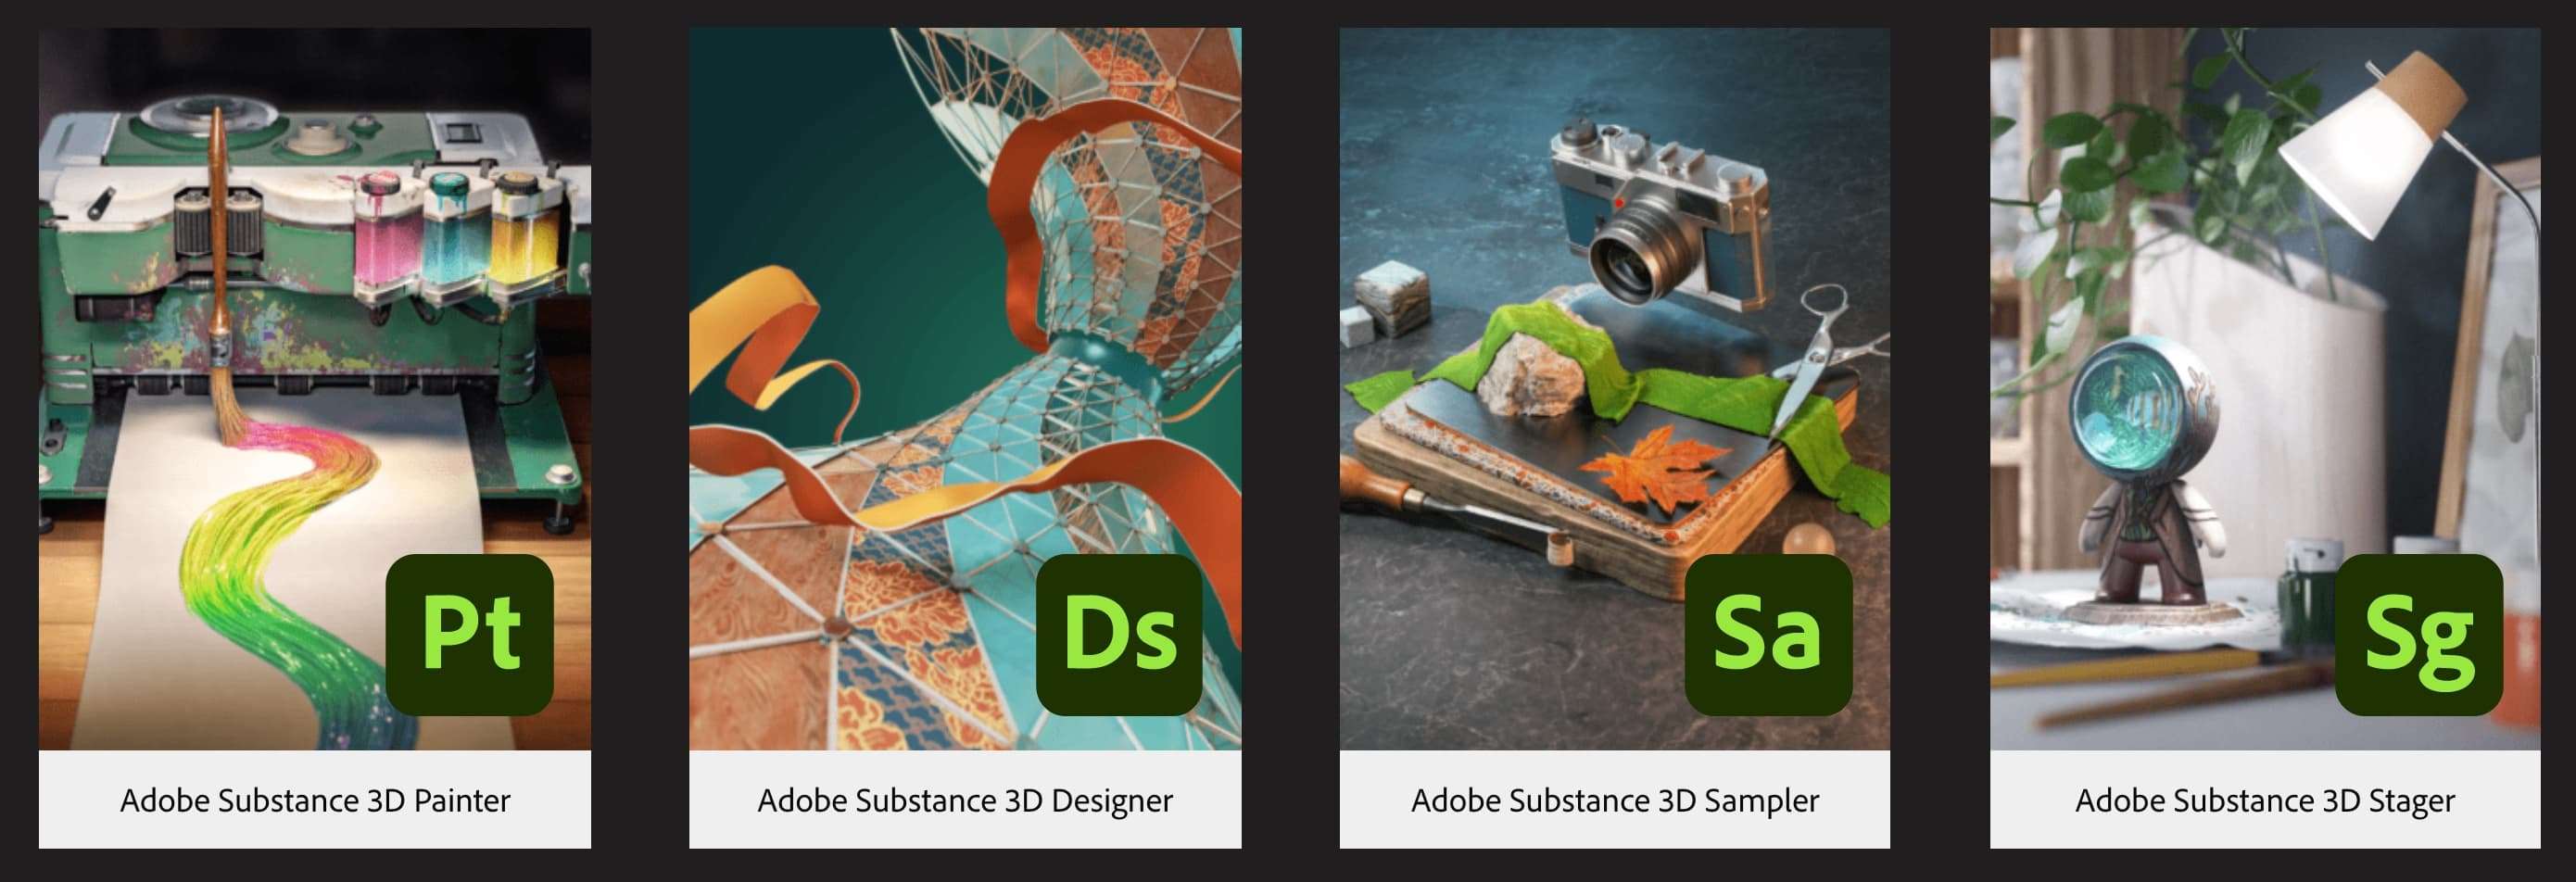 adobe substance 3d free download